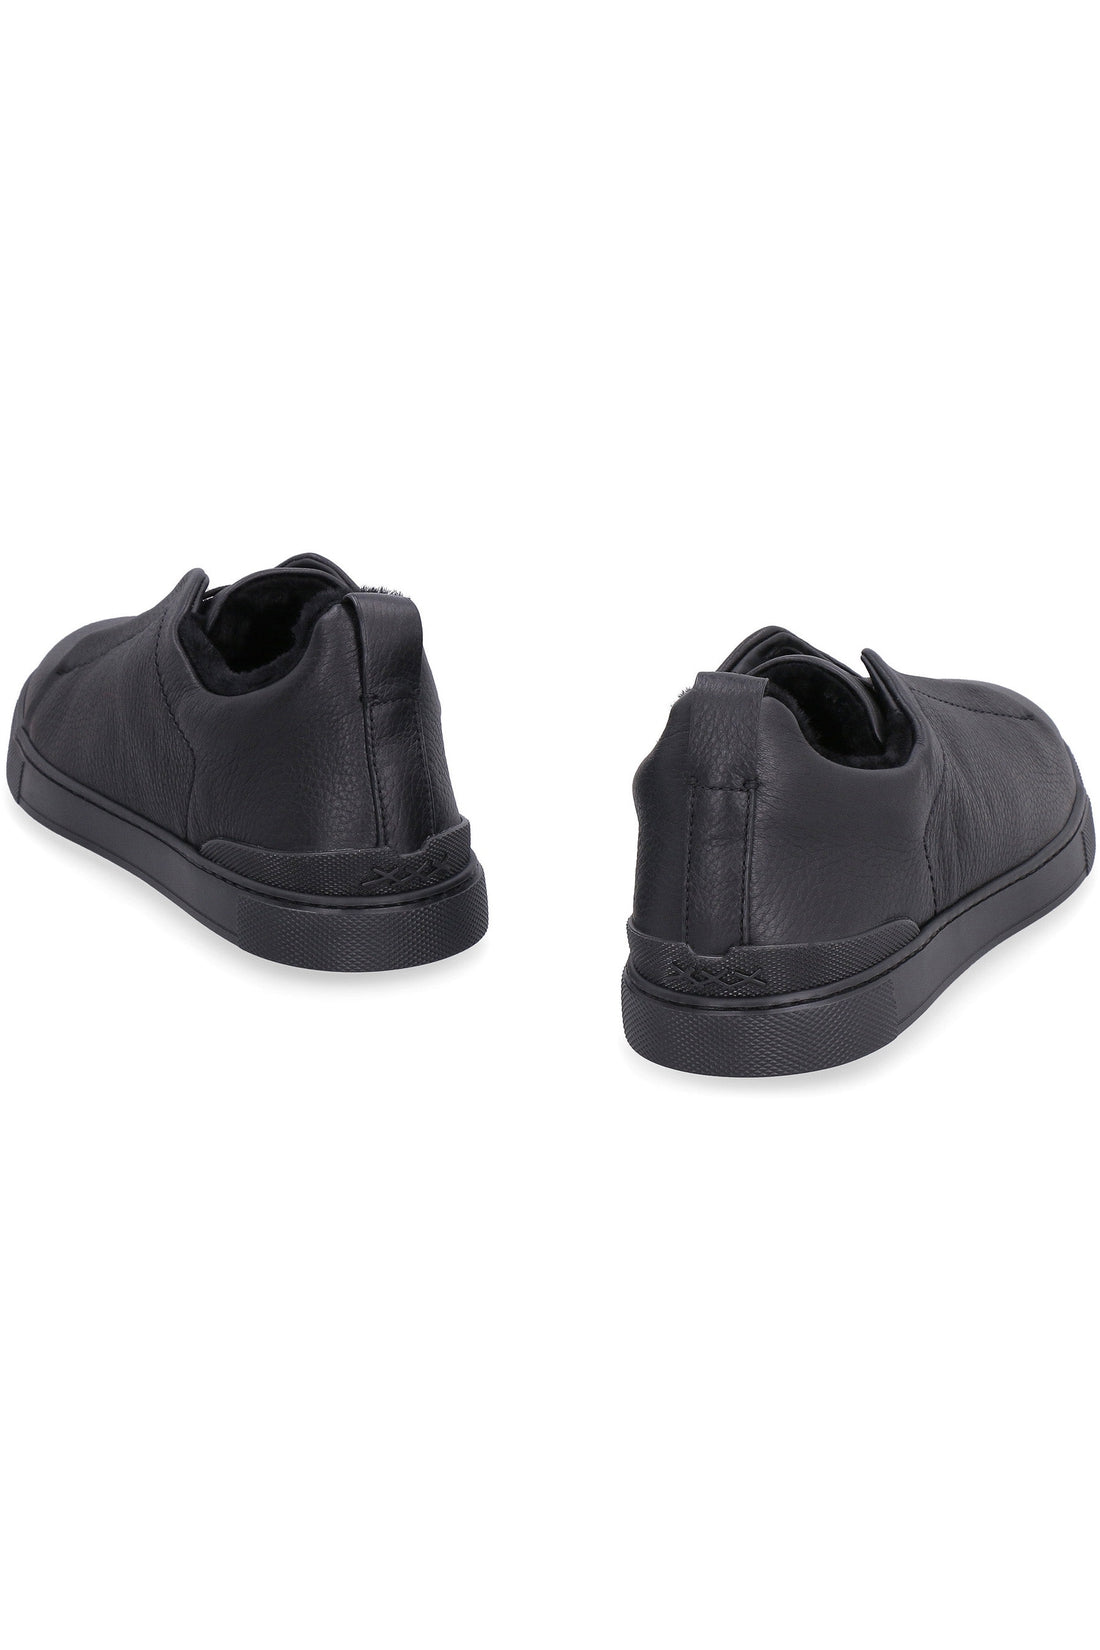 Zegna-OUTLET-SALE-Triple Stitch leather sneakers-ARCHIVIST